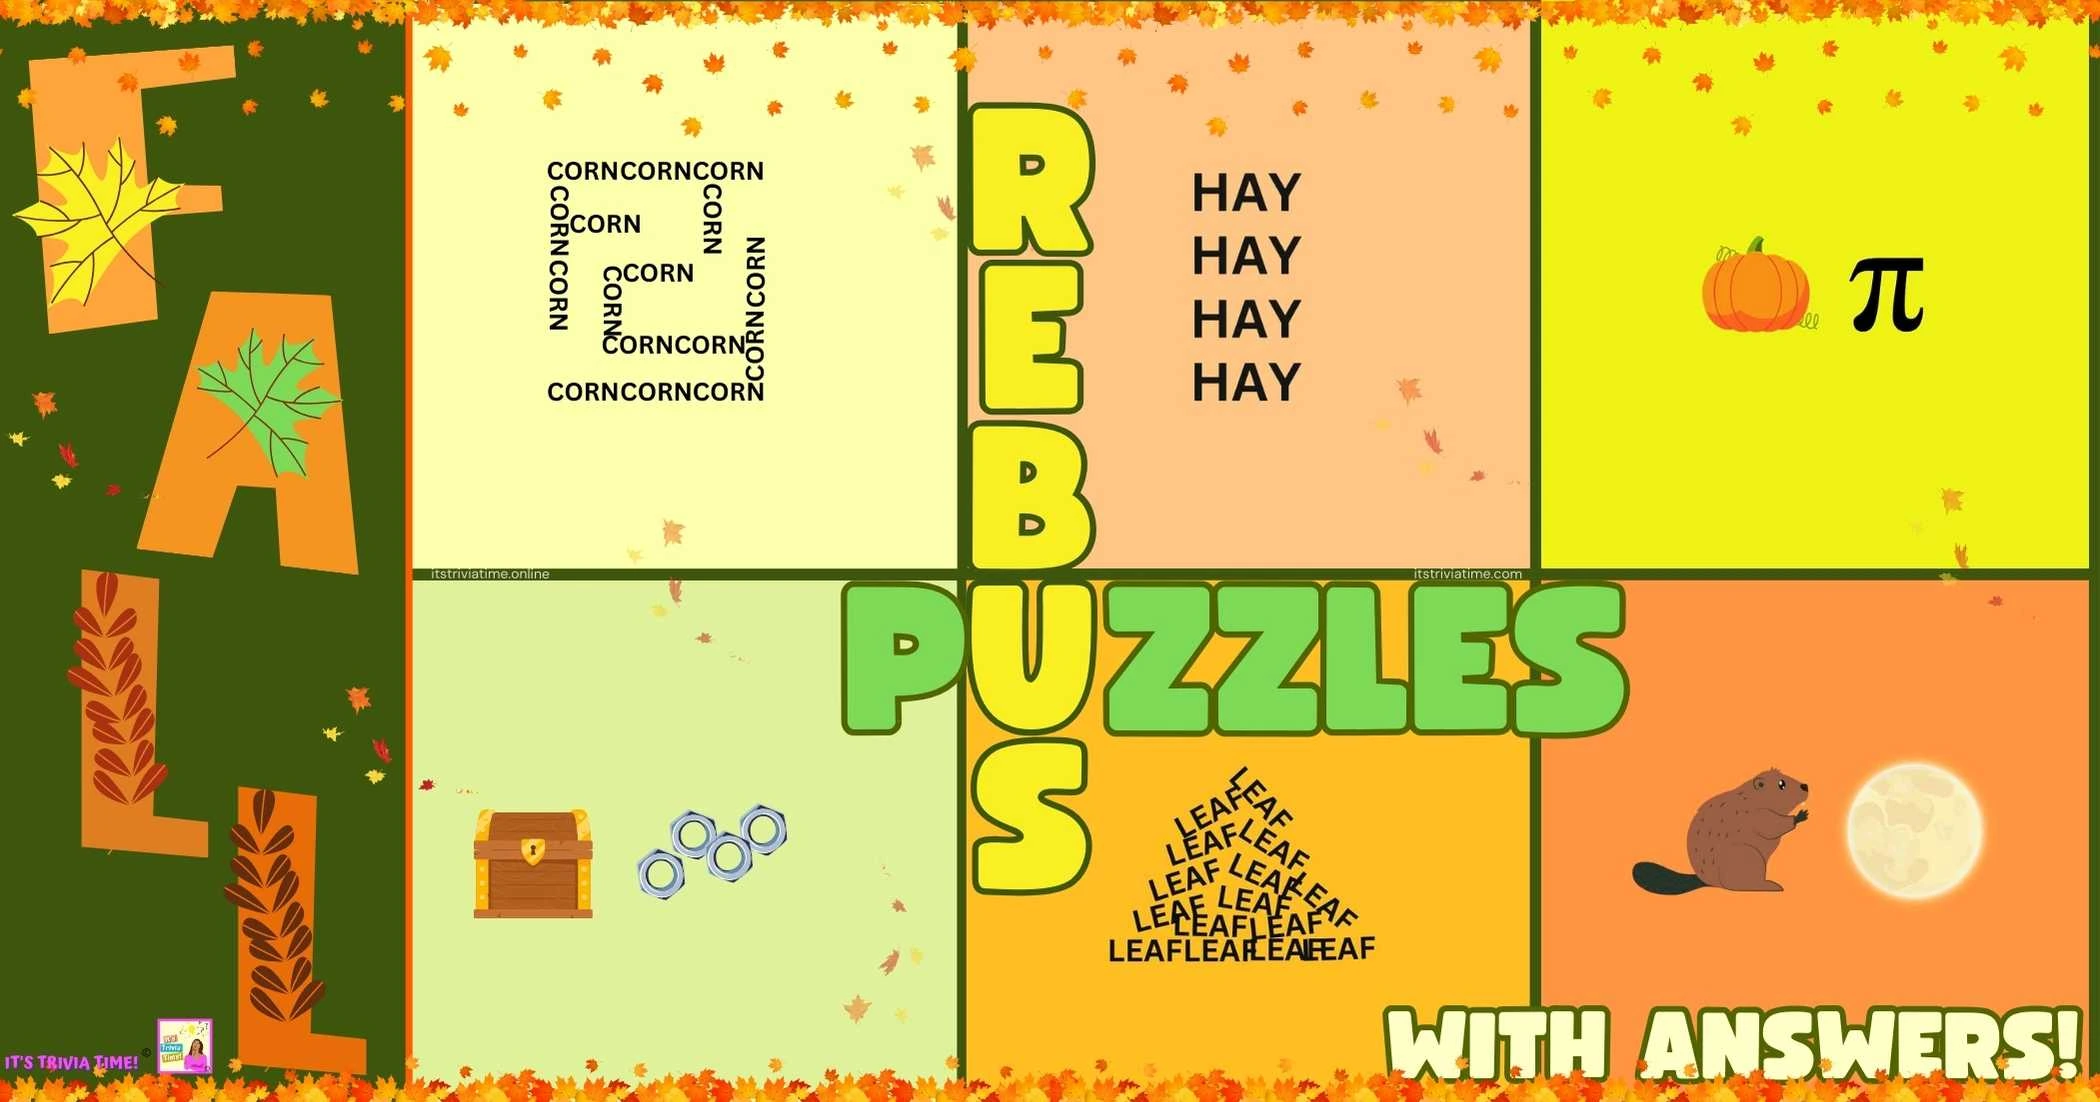 Here are four unique rebus puzzles, each representing a popular